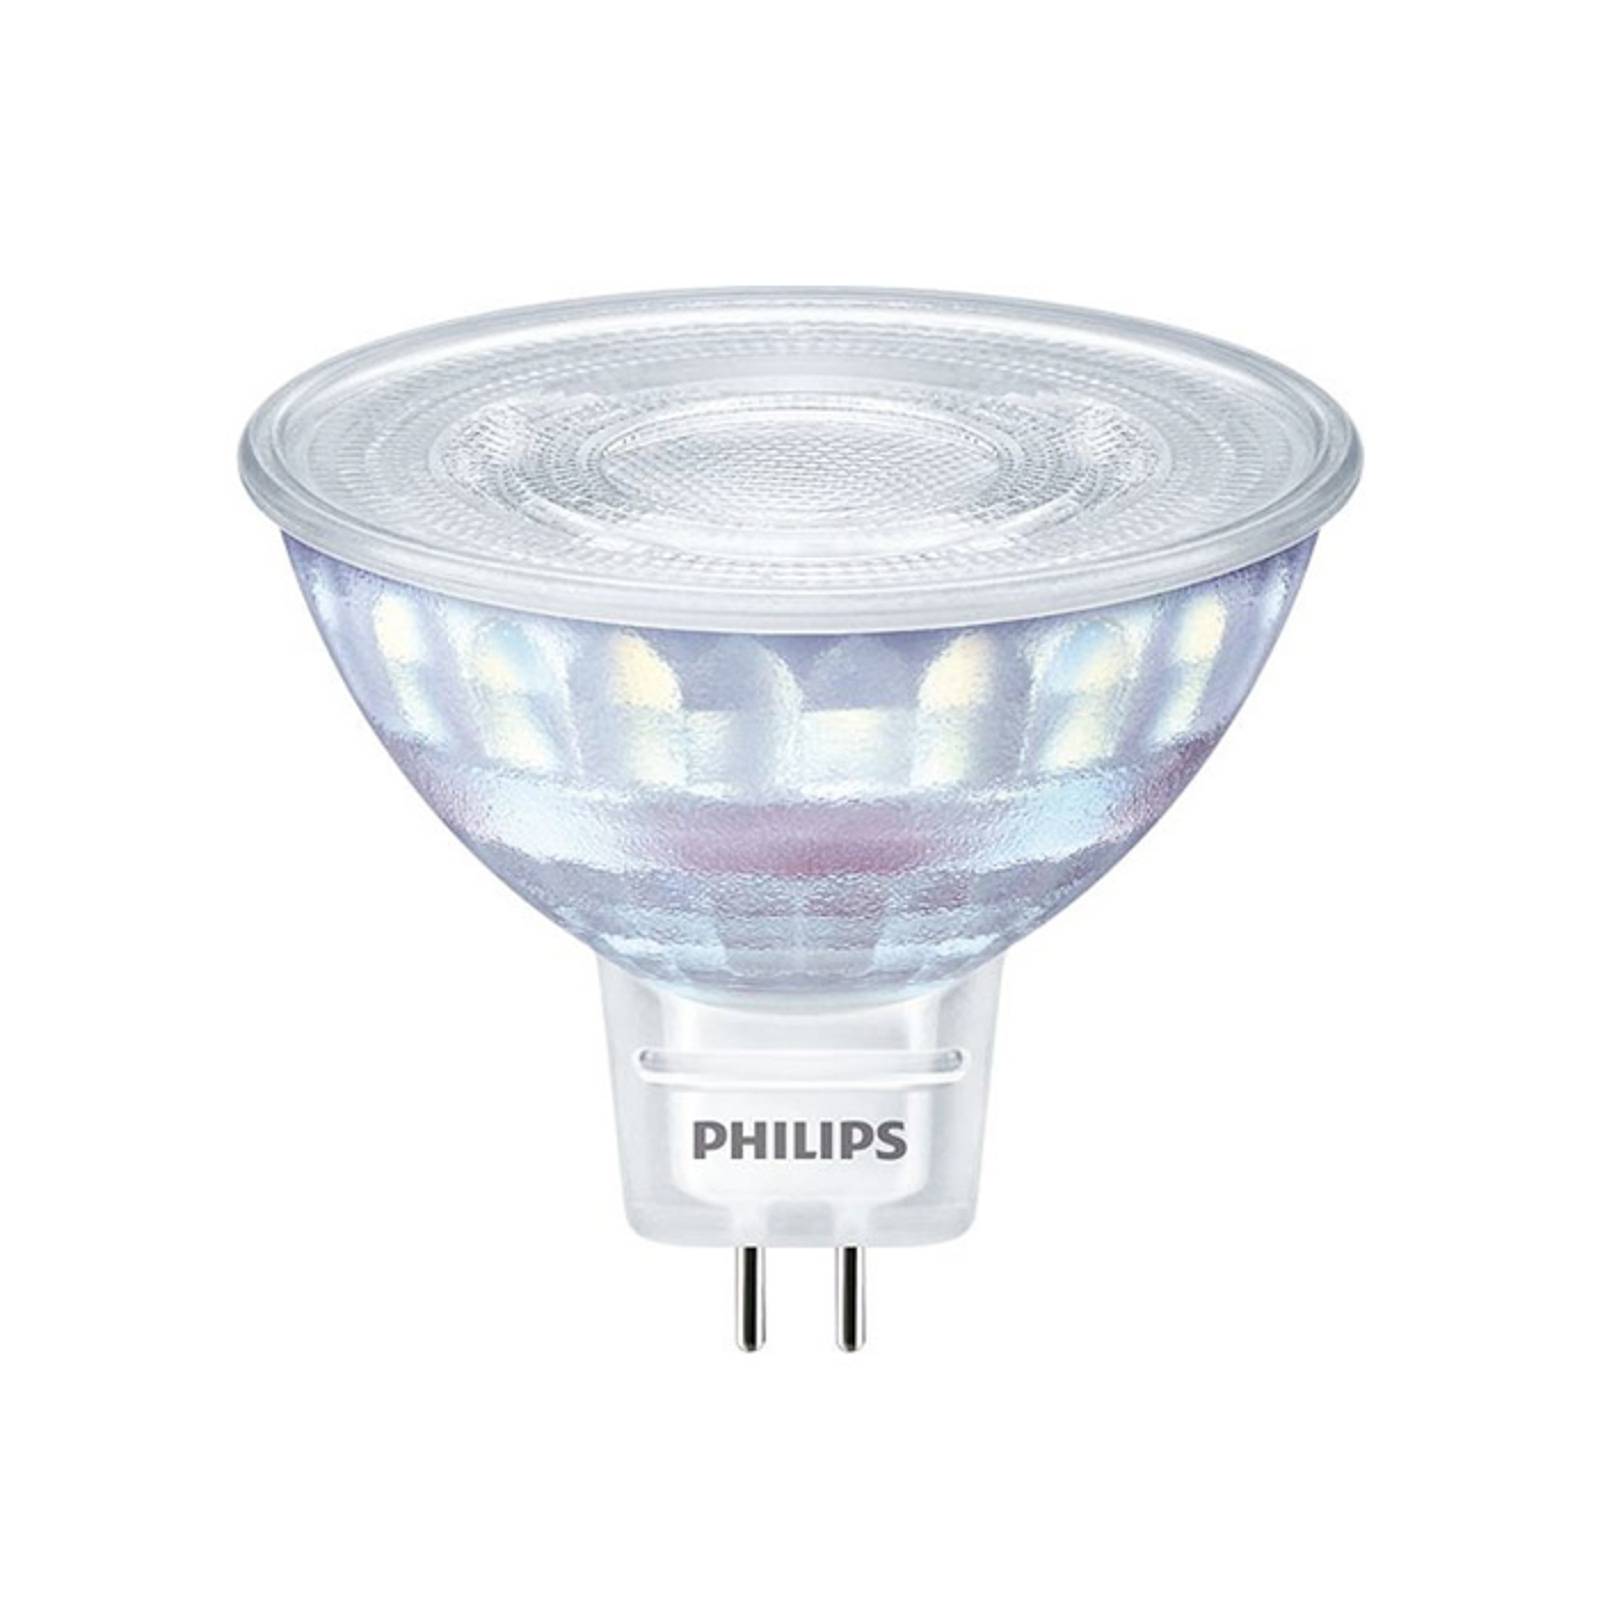 Philips LED Reflektor GU5,3 7W dimmbar warmglow von Philips